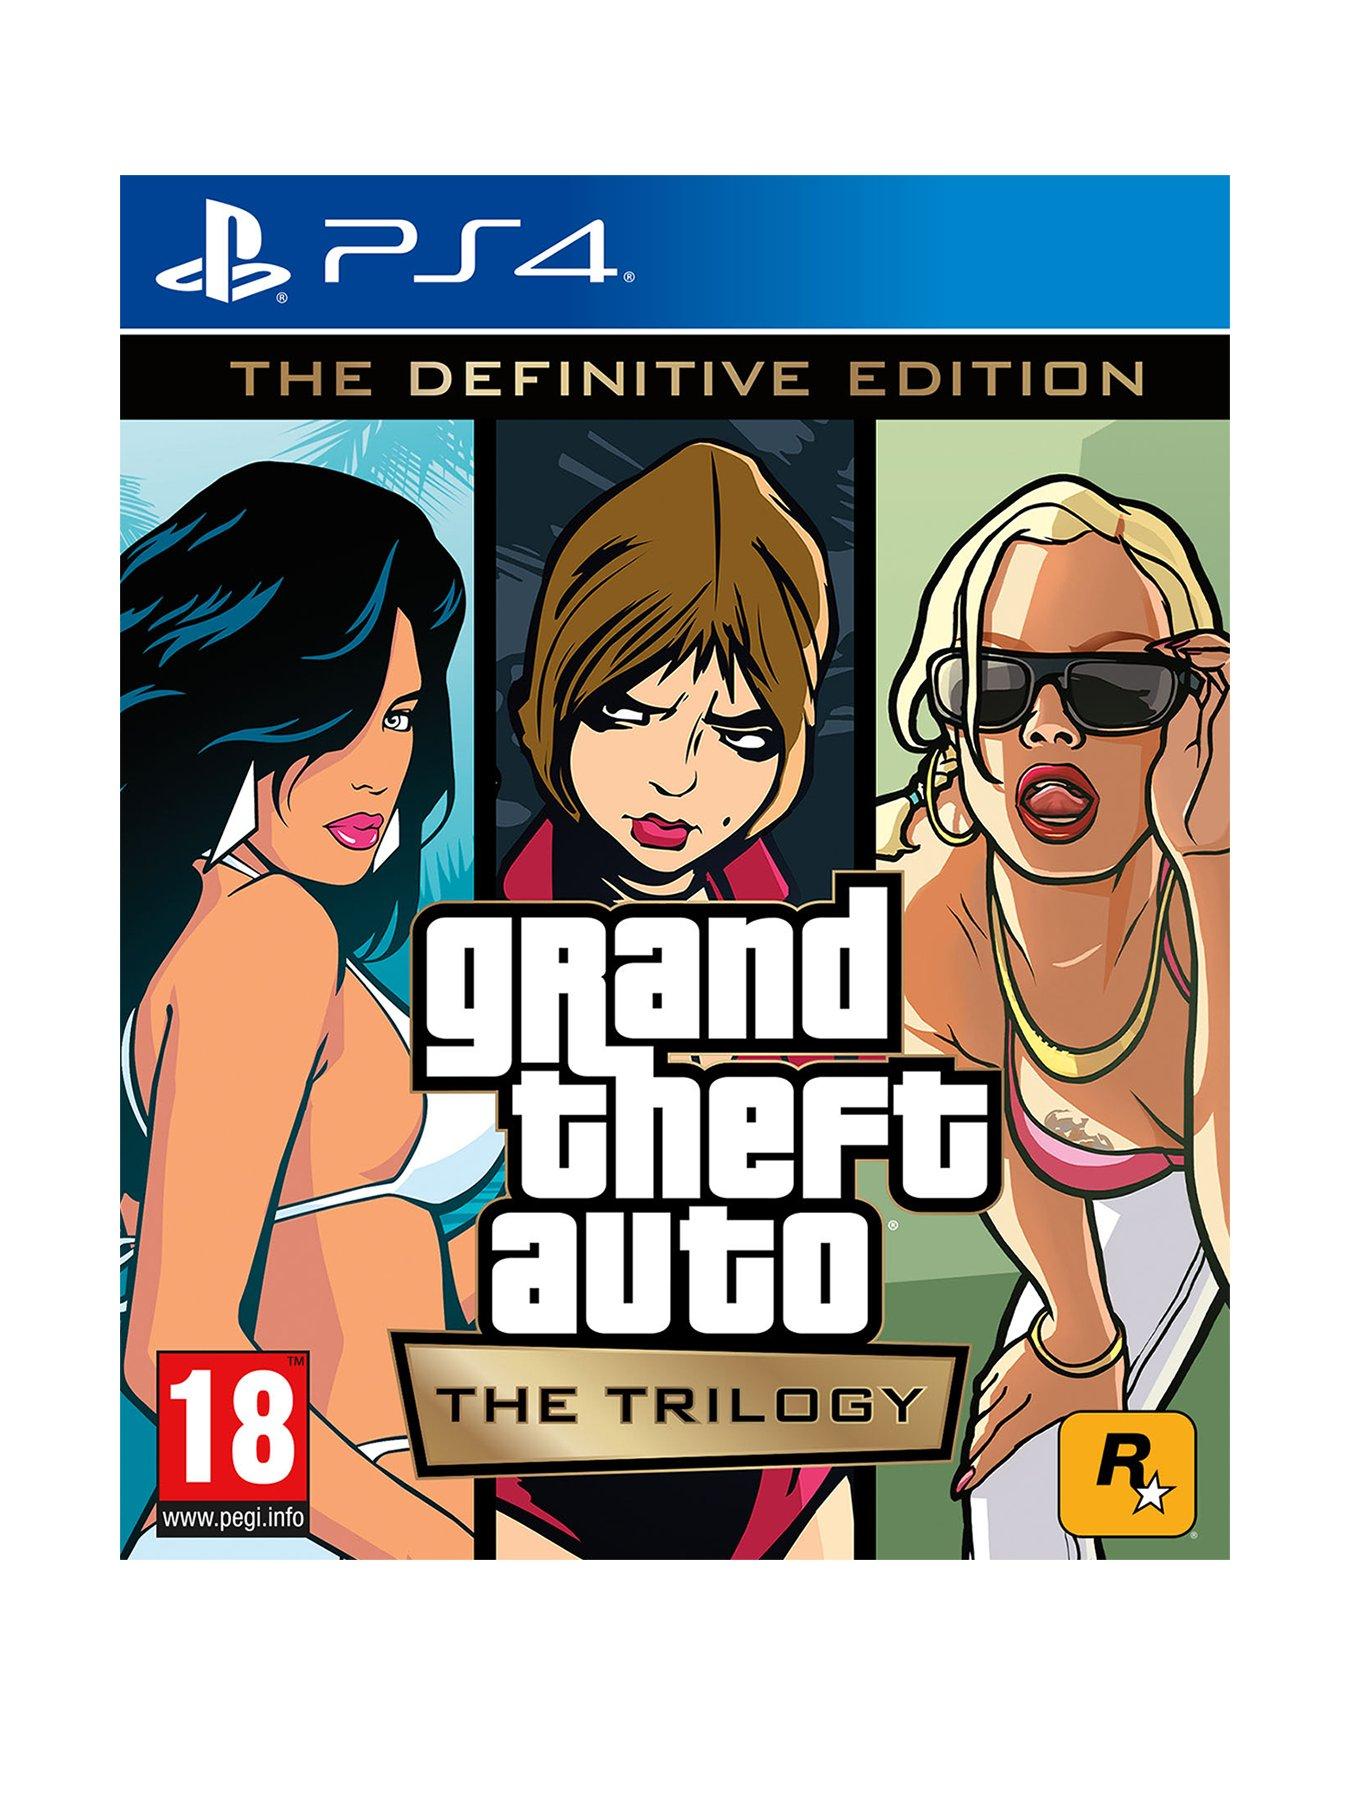 Grand Theft Auto GTA San Andreas PS3 PSN Mídia Digital - Puma